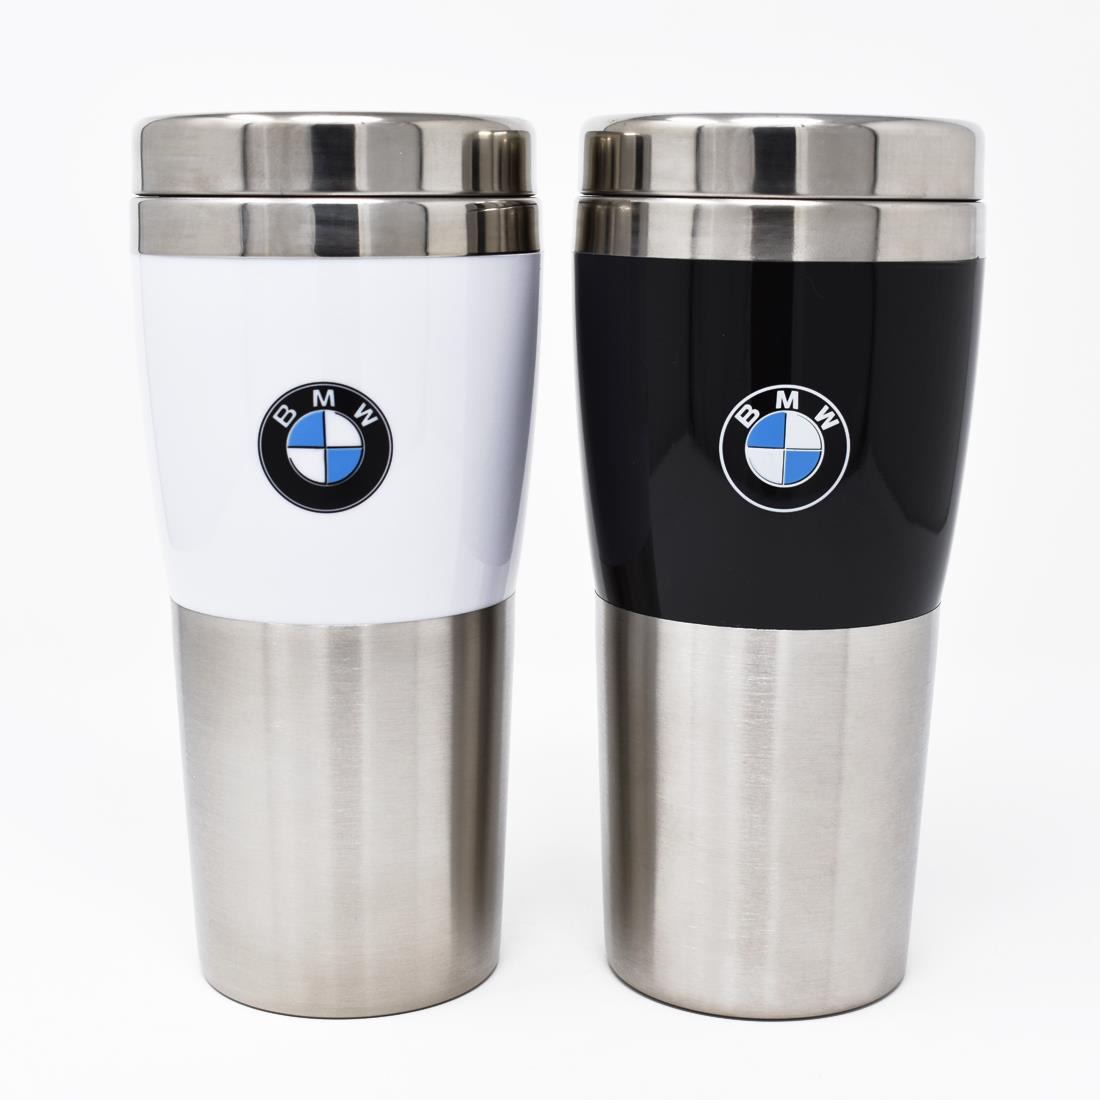 Genuine BMW thermos/Coffee mug 876-360-2675